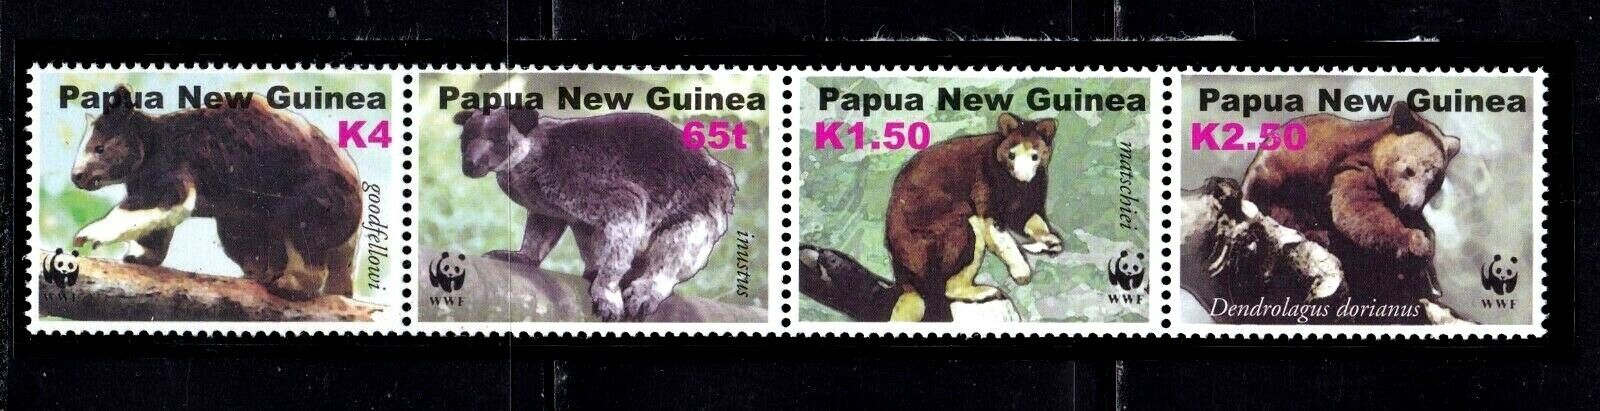 Papua New Guinea Strip #1090, MNHOG, XF